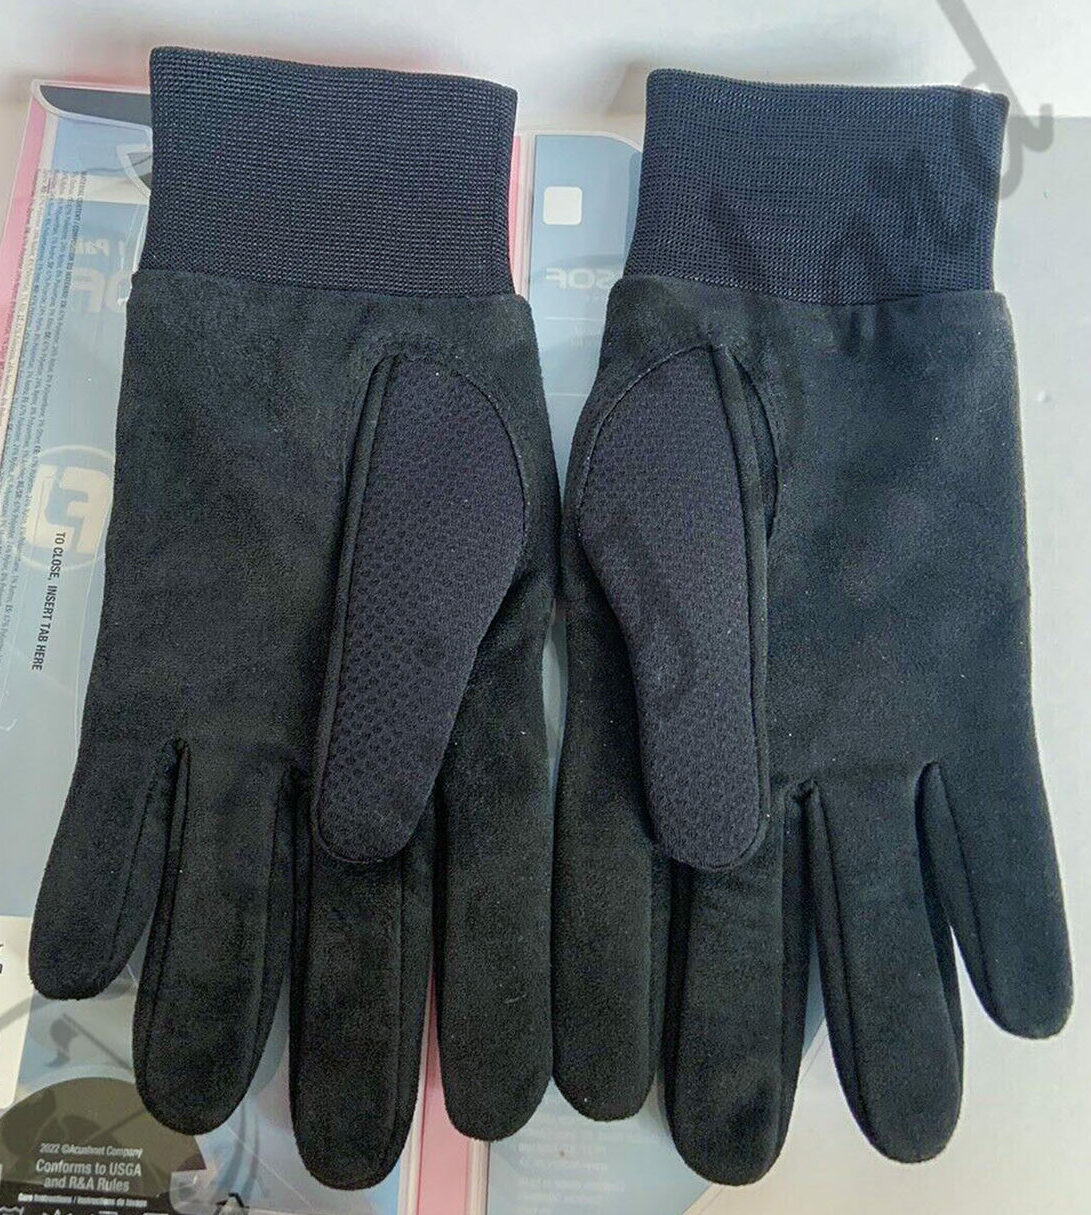 My new FootJoy women winter sof golf gloves for testing